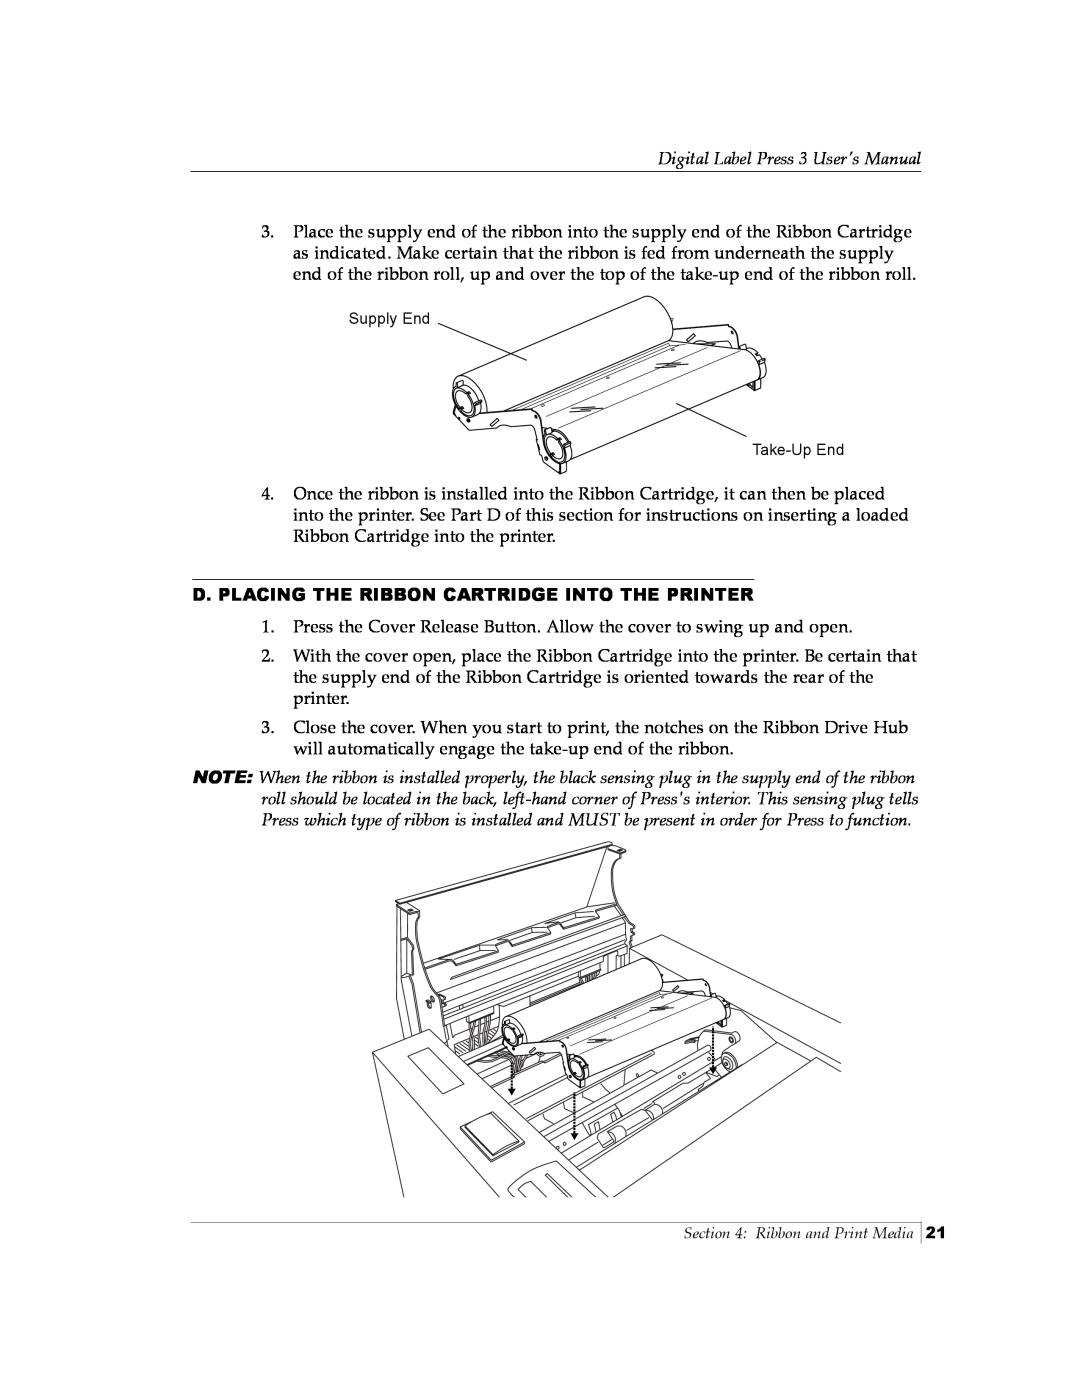 Primera Technology 510212 manual D. Placing The Ribbon Cartridge Into The Printer, Digital Label Press 3 User’s Manual 